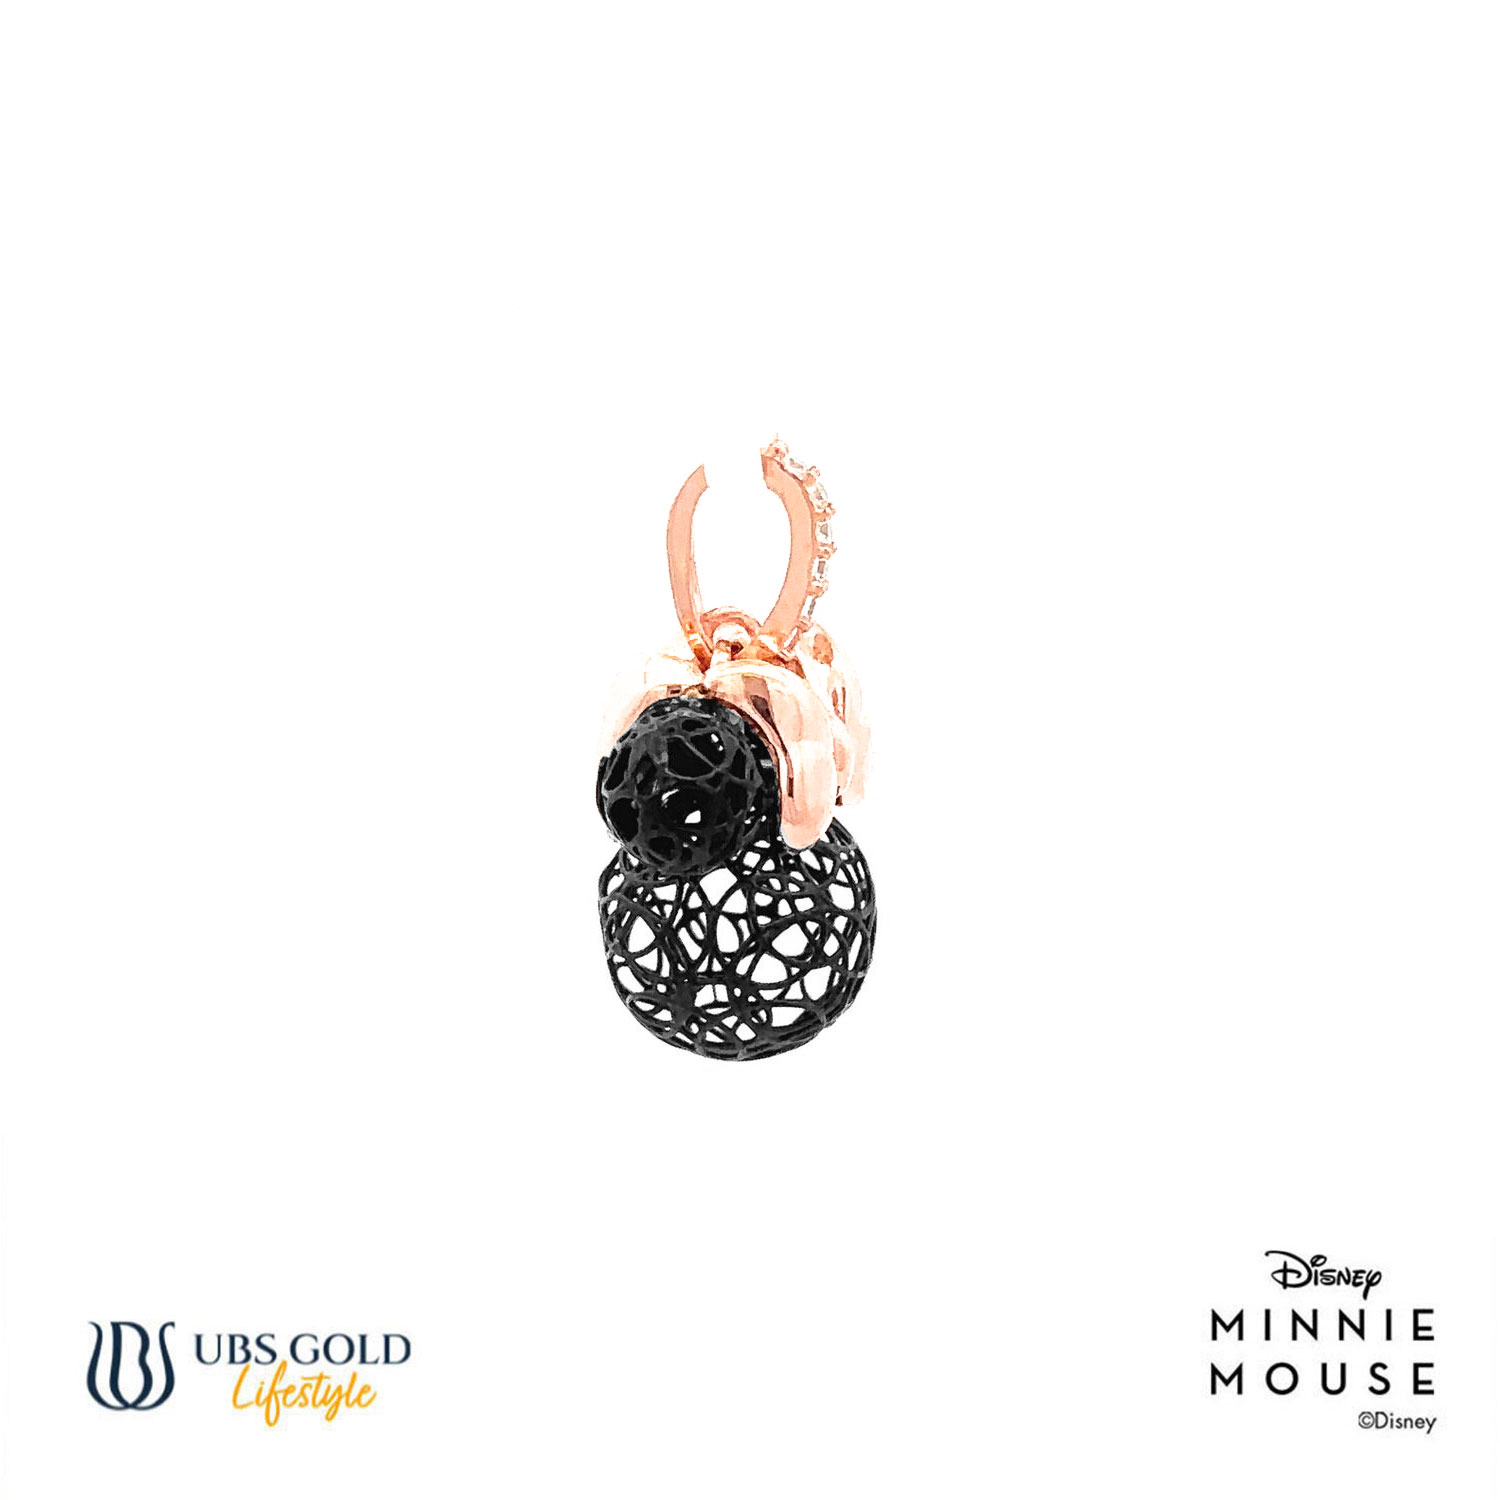 UBS Gold Liontin Emas Disney Minnie Mouse - Cly0022 - 17K